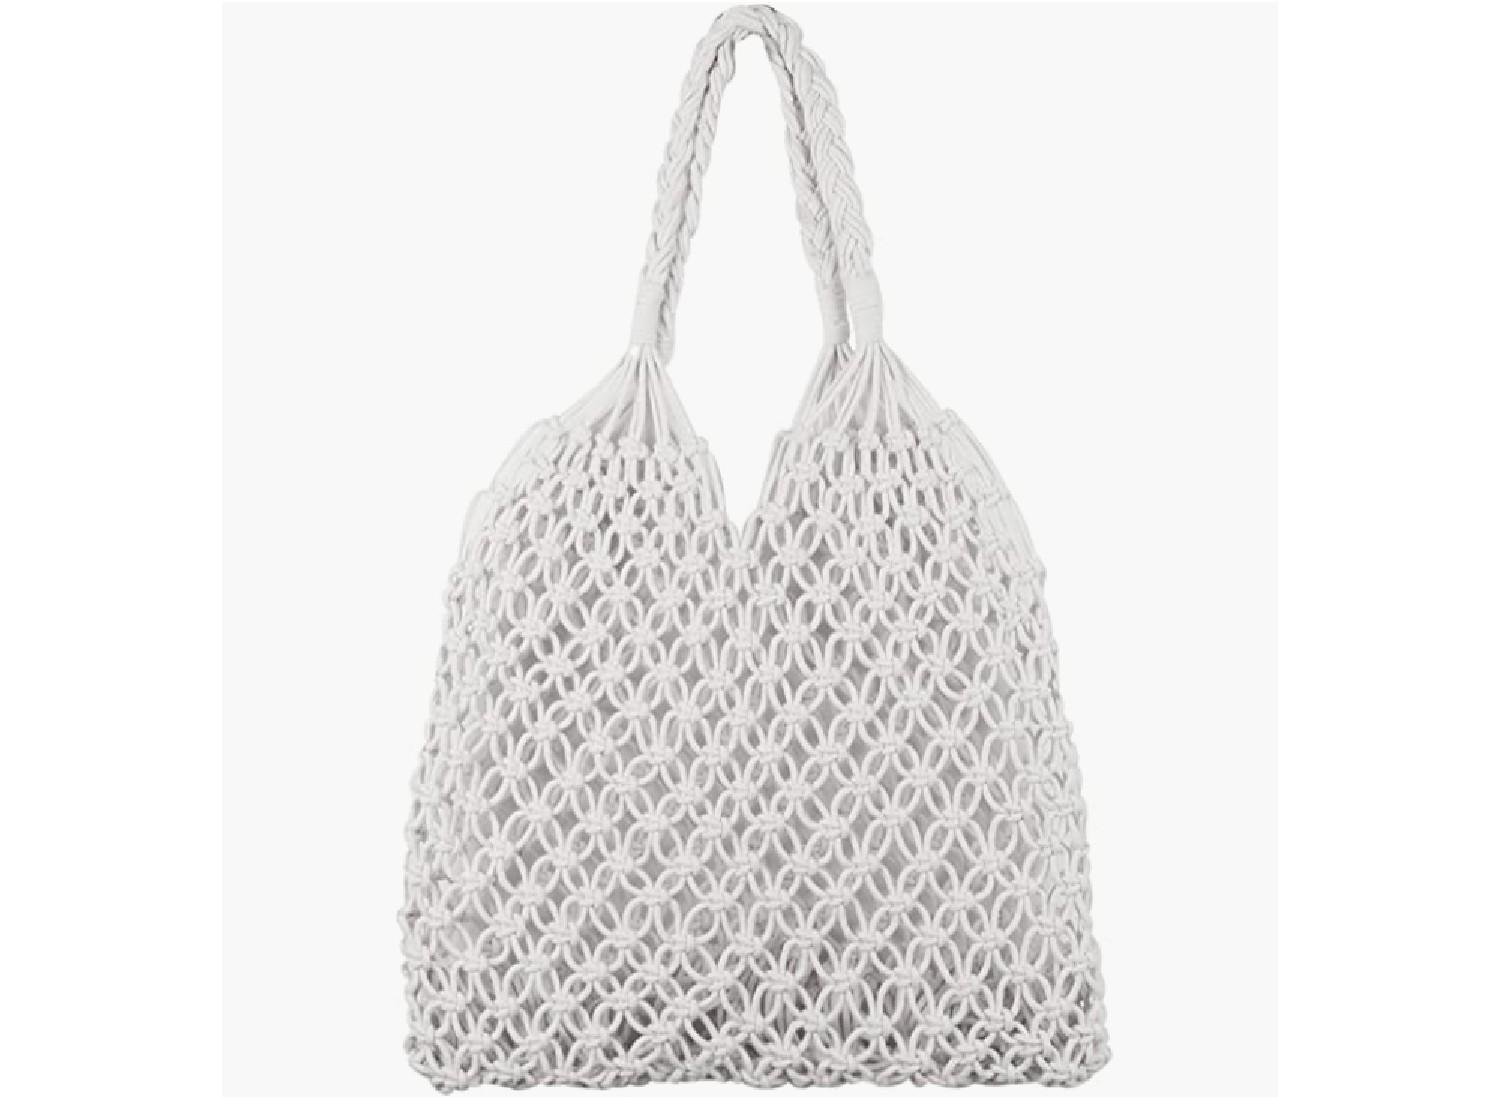 A white crochet tote bag.